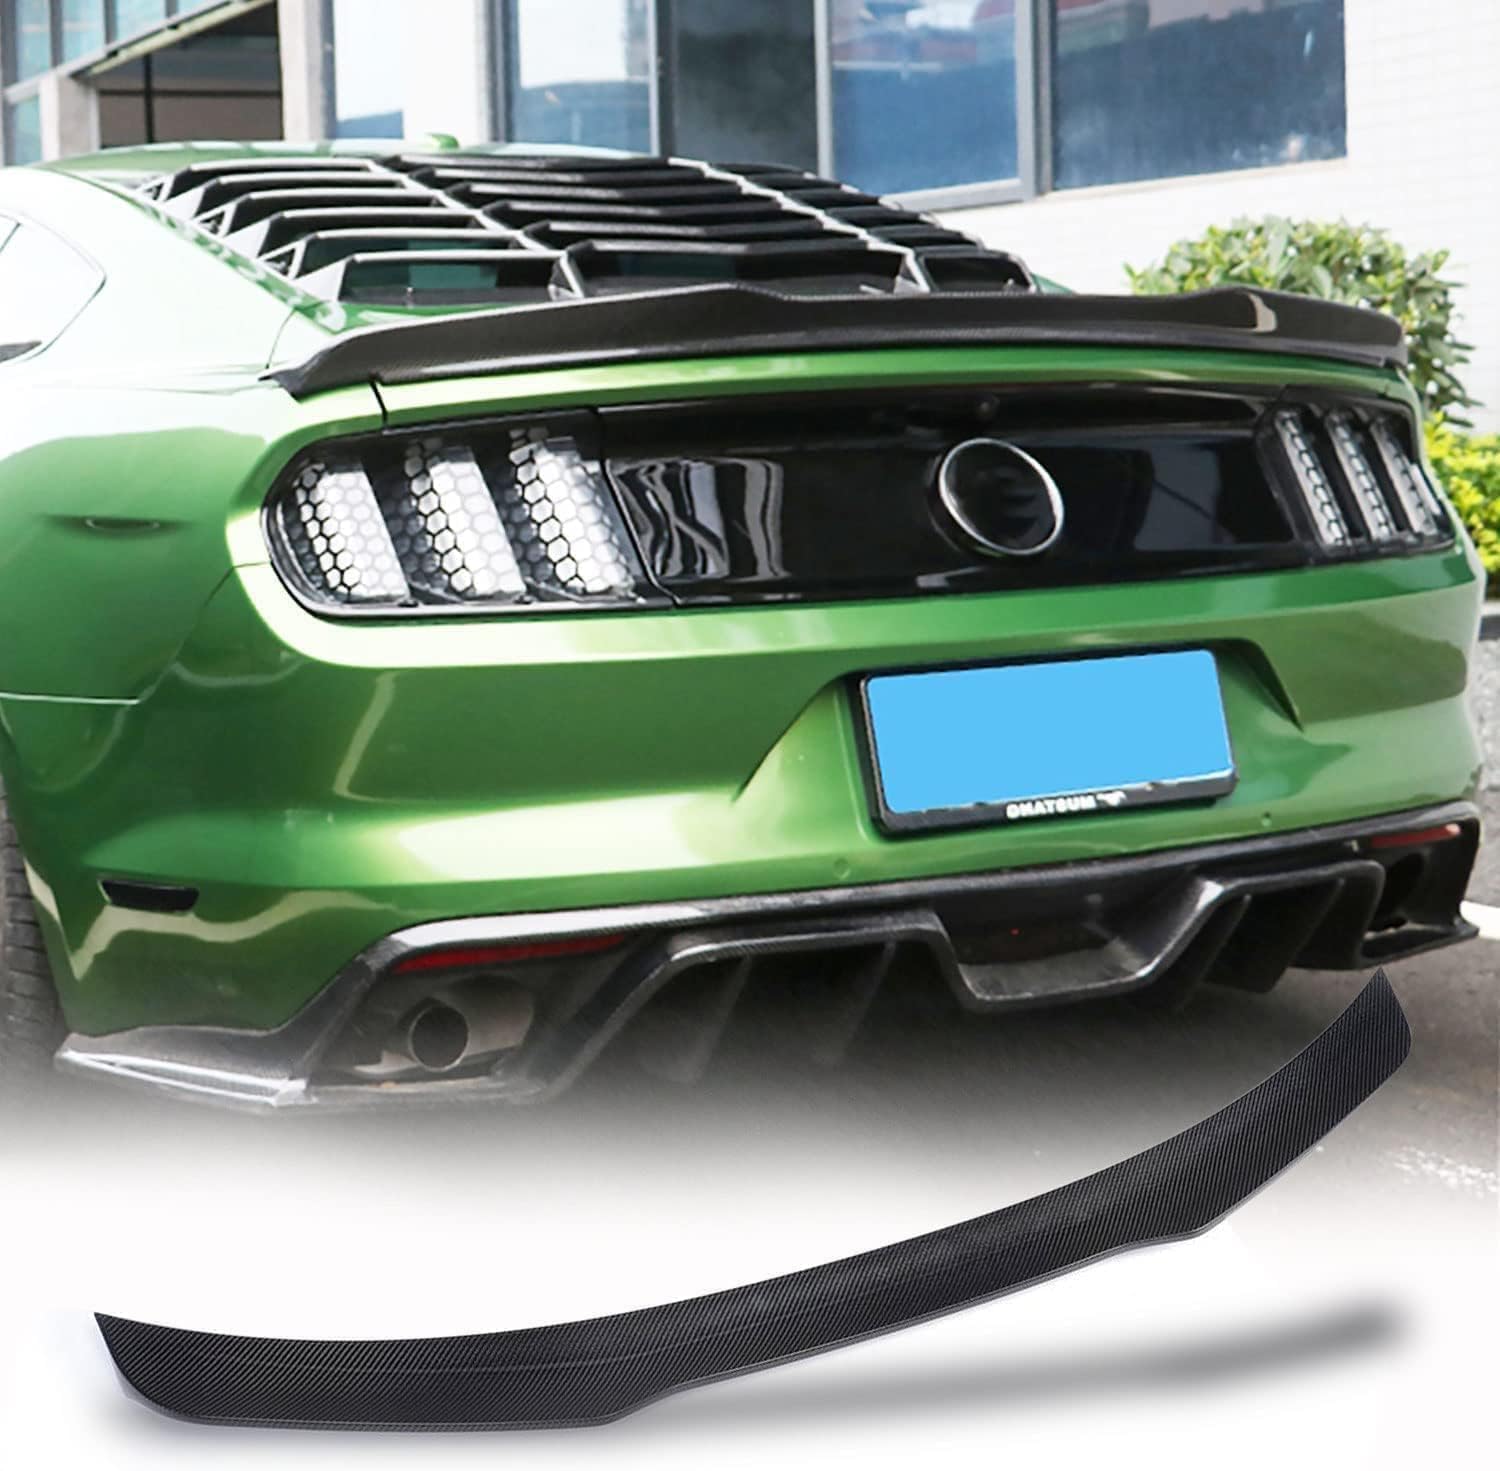 Heckflügel fester Winds poiler Heckflügel modifiziertes zubehör für Ford Mustang GT Coupe 2-Door 2015 2016 2017 2018 2019 2020 2021,hinten Kofferraum flügel von LeLeD